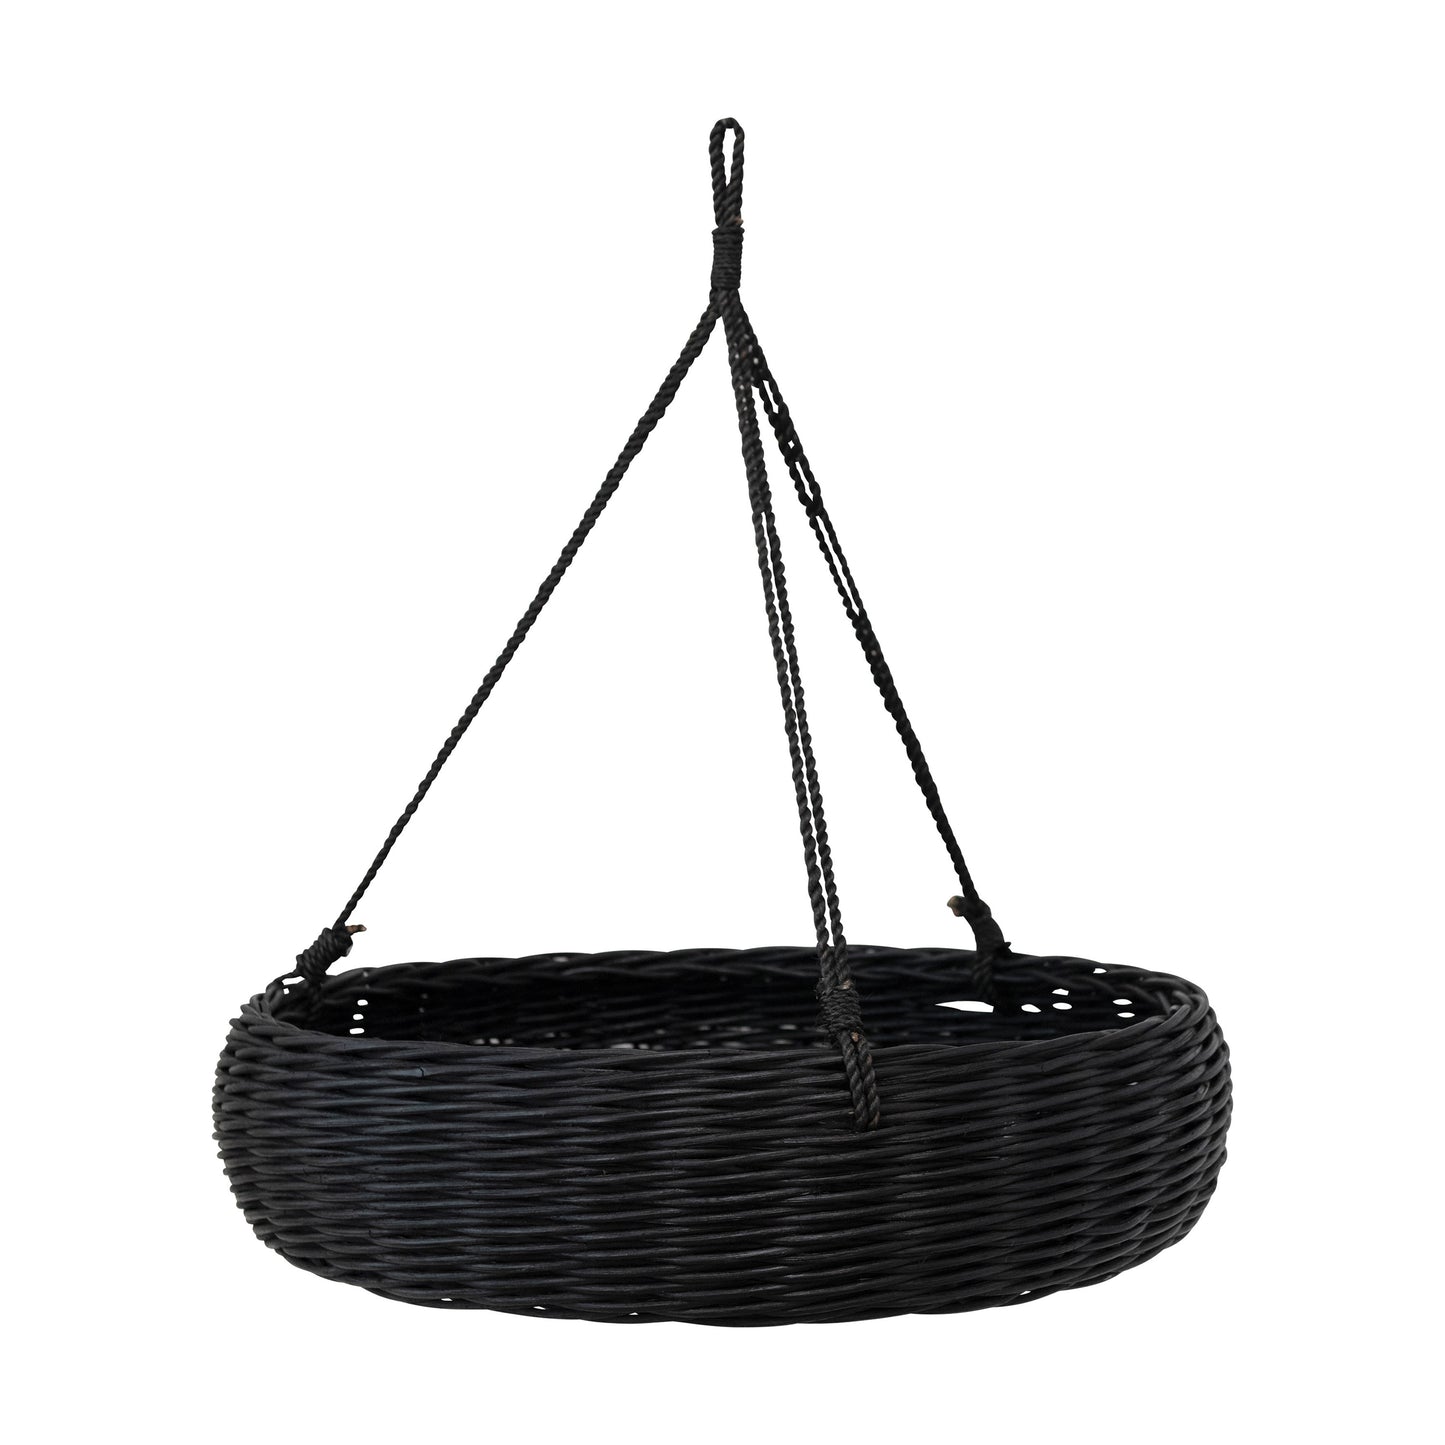 Hand-Woven Hanging Rattan Basket with Jute Rope Hanger